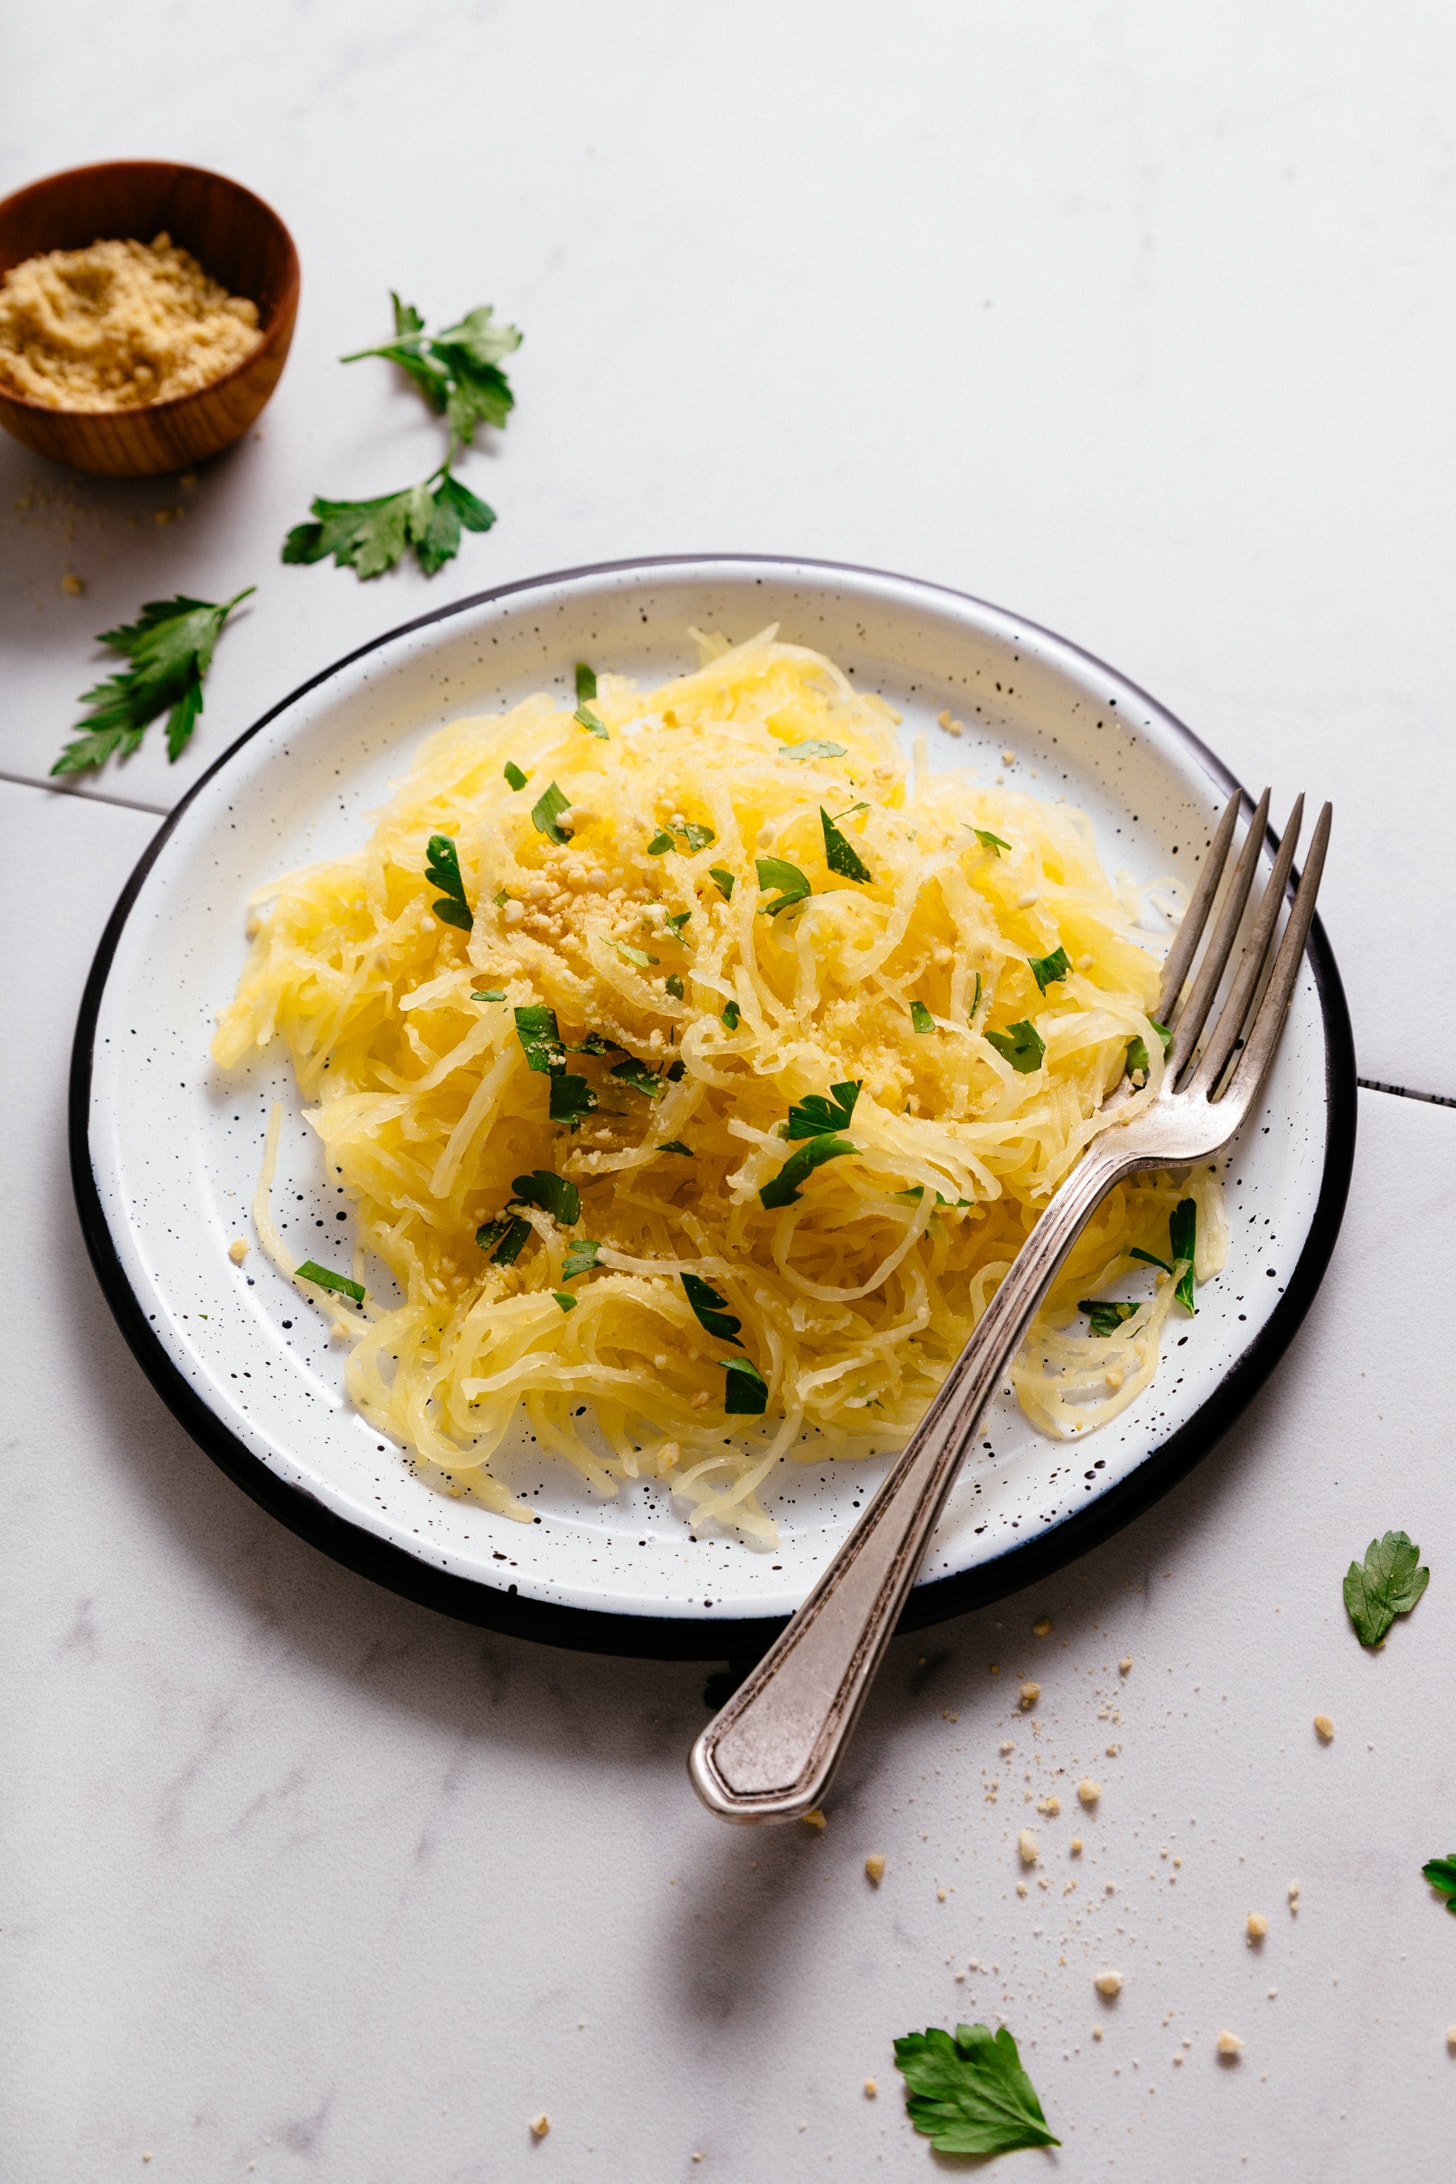 Plate of spaghetti squash pasta made using our tutorial on How to Roast Spaghetti Squash